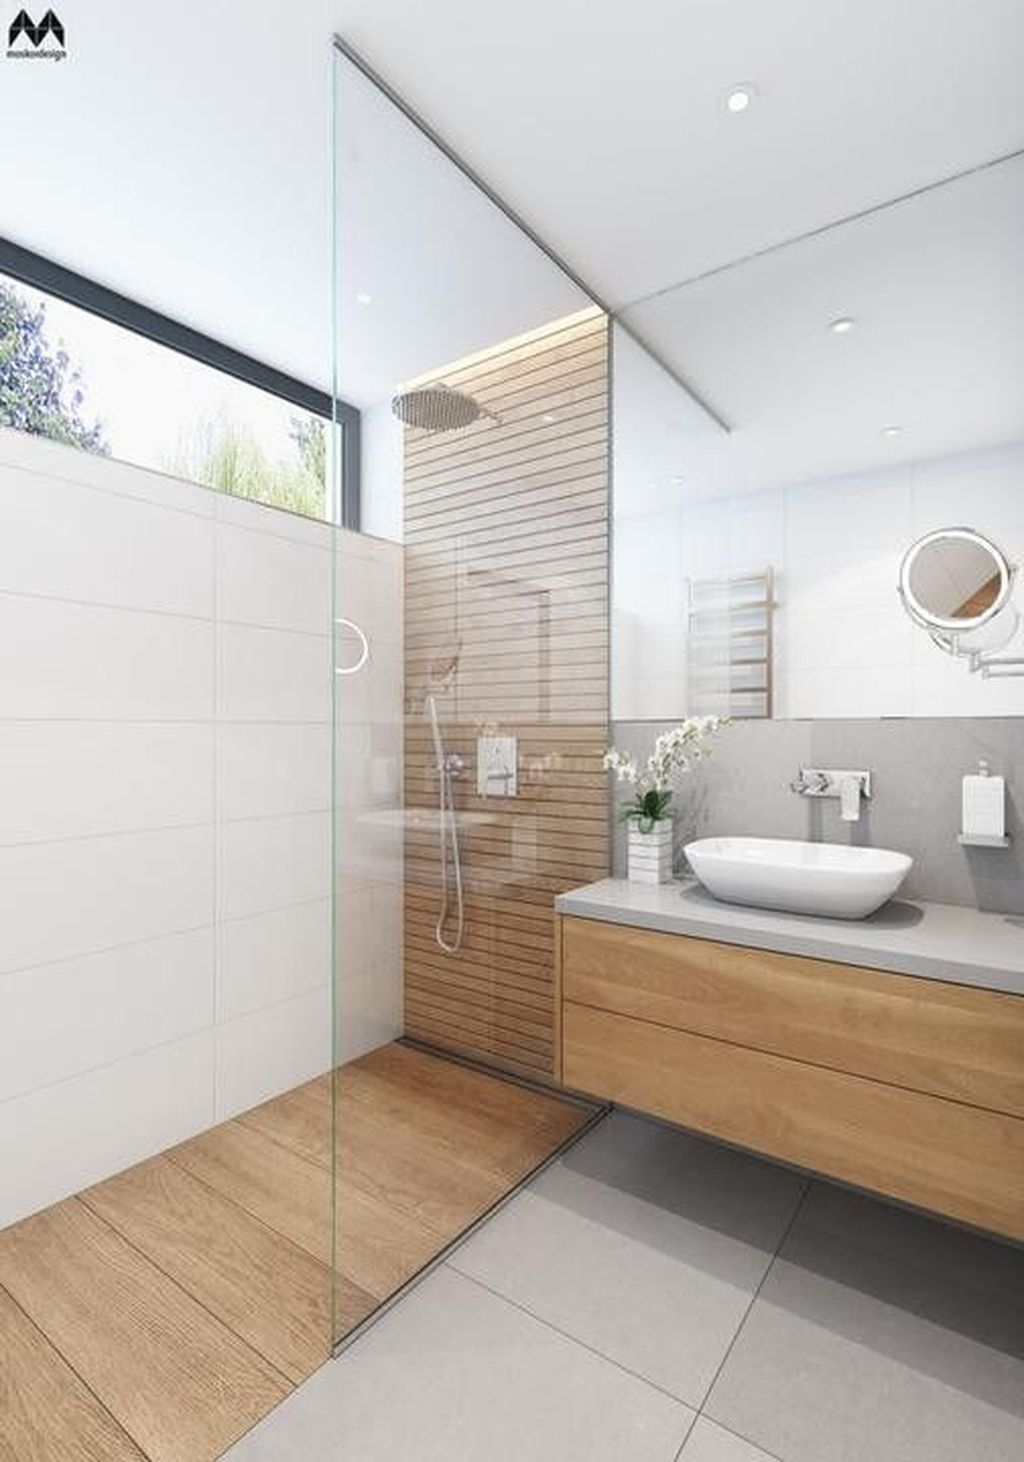 Marvelous Wooden Shower Floor Tiles Designs Ideas For Bathroom Remodel 05